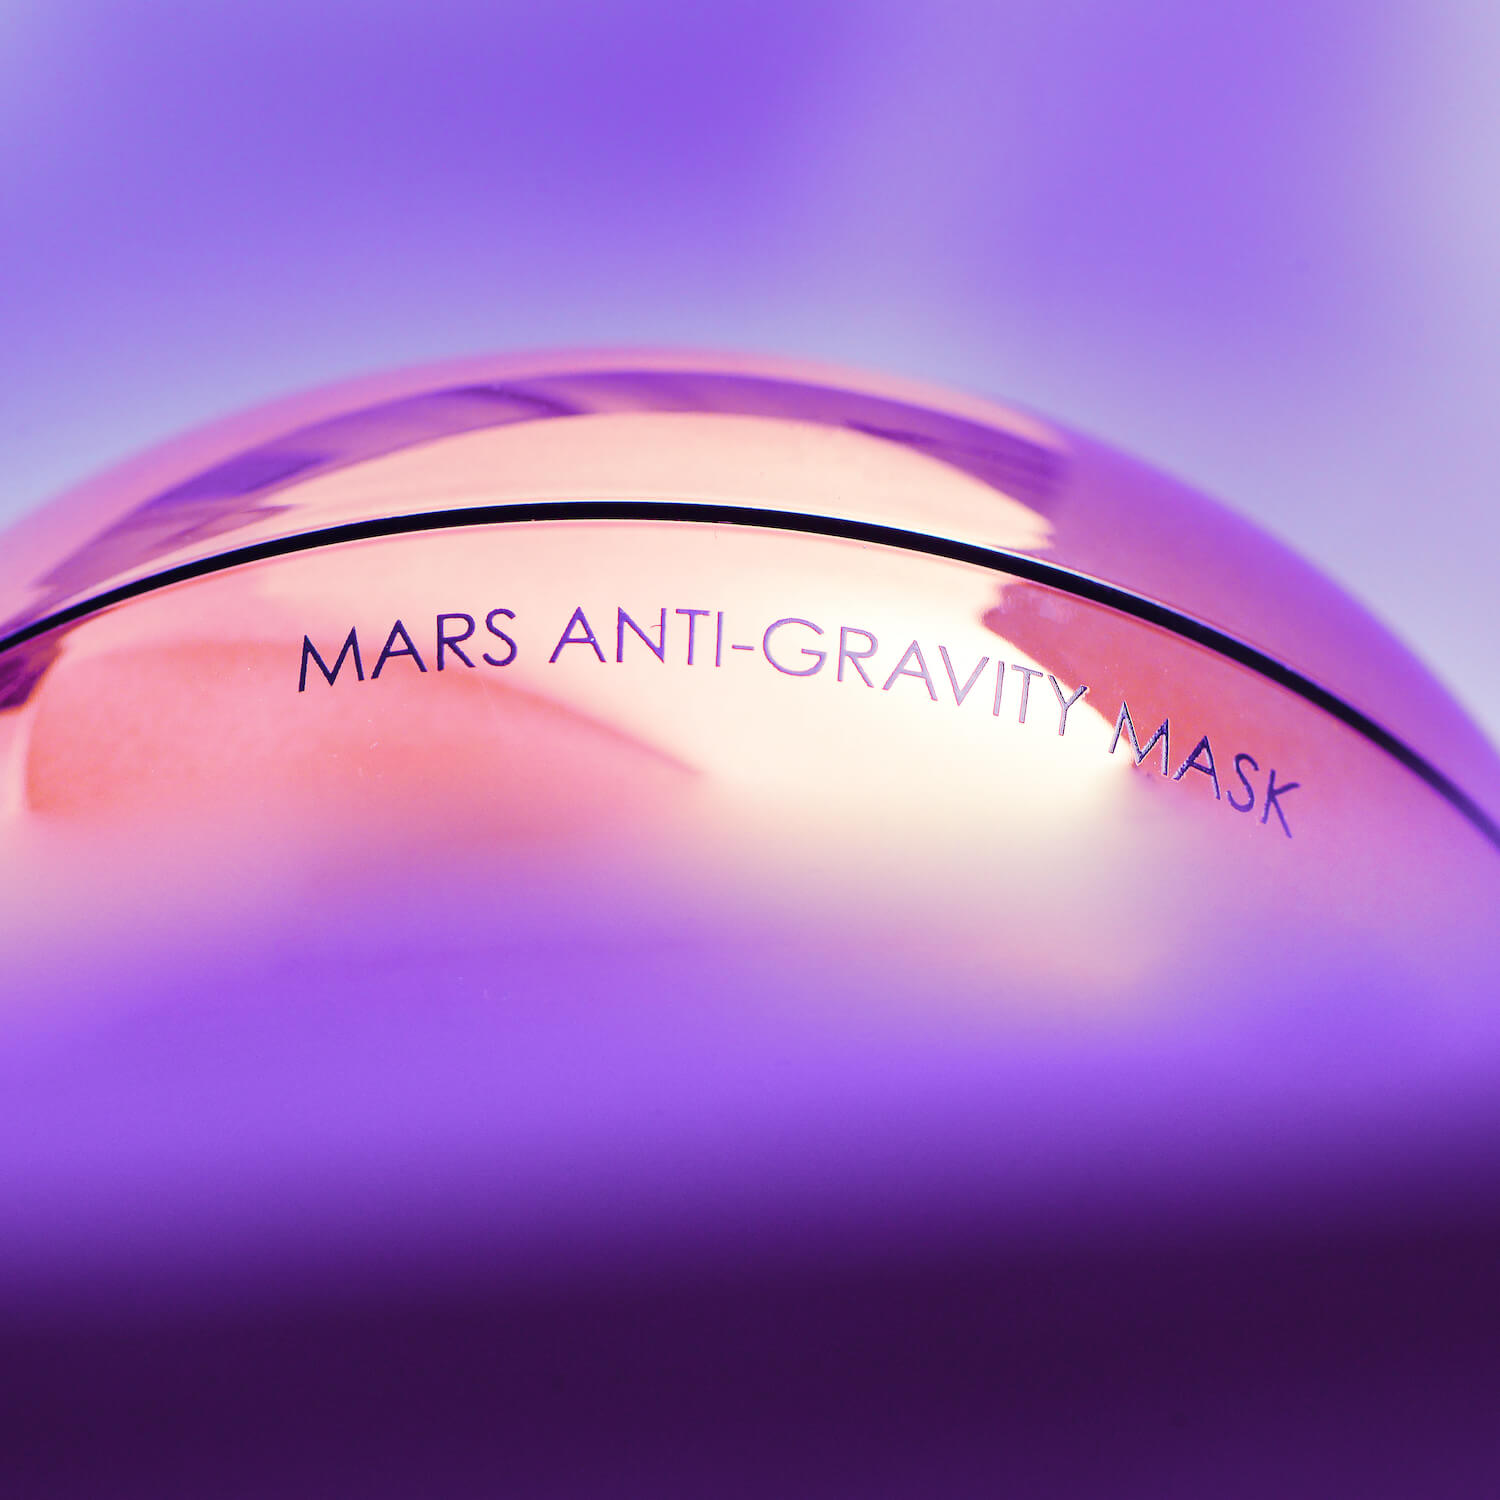 Mars Anti-Gravity Mask